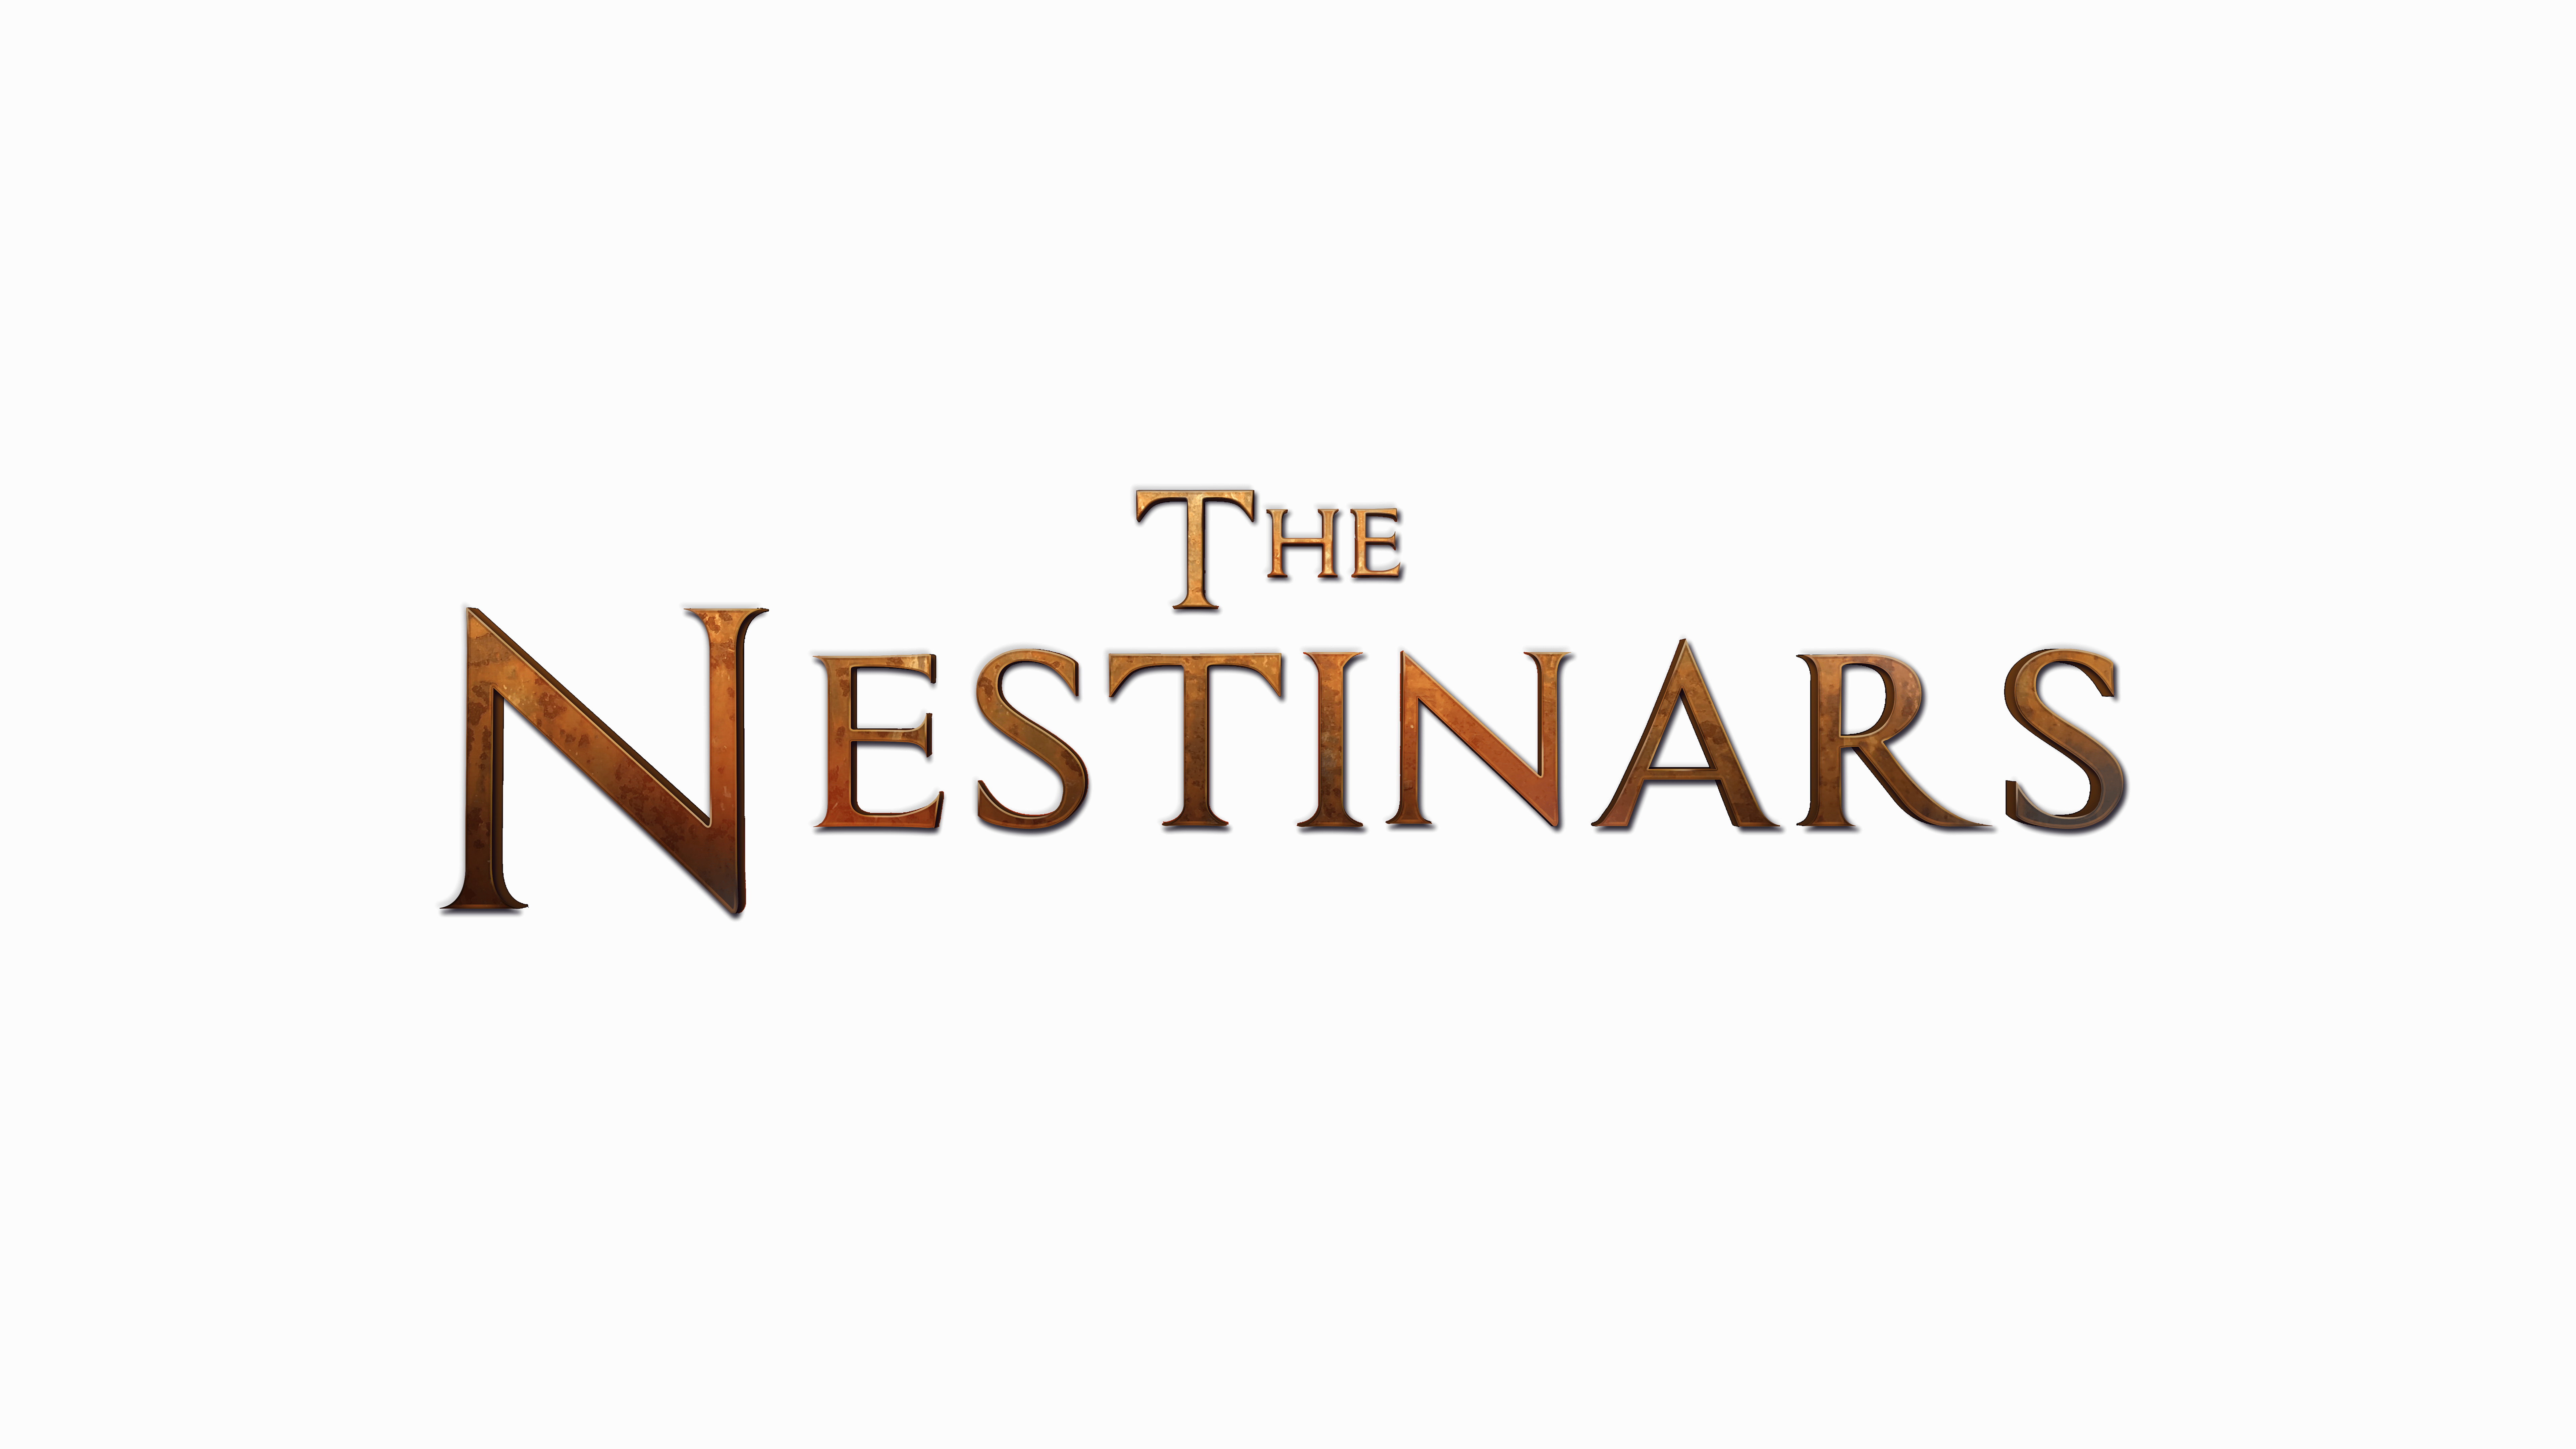 Nestinars logo with text